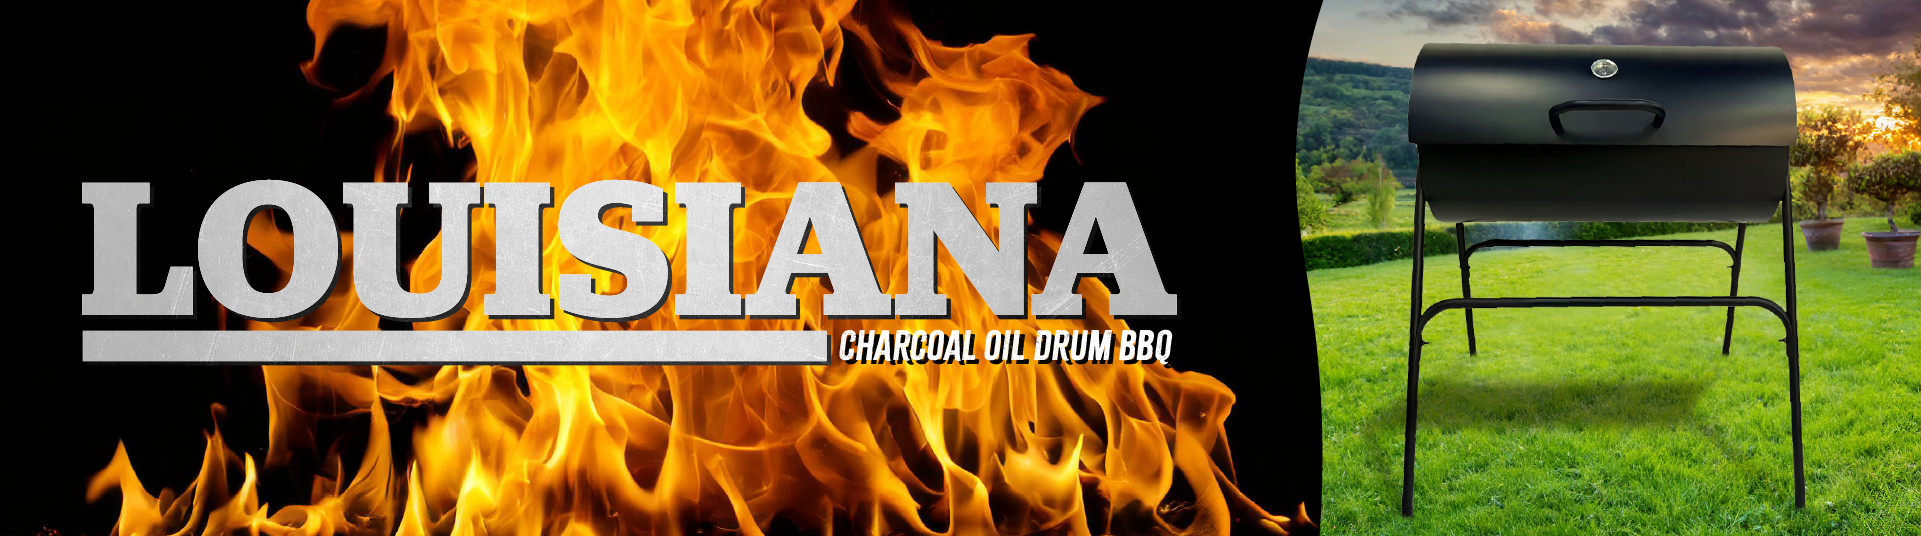 BillyOh Louisiana Charcoal Oil Drum BBQ